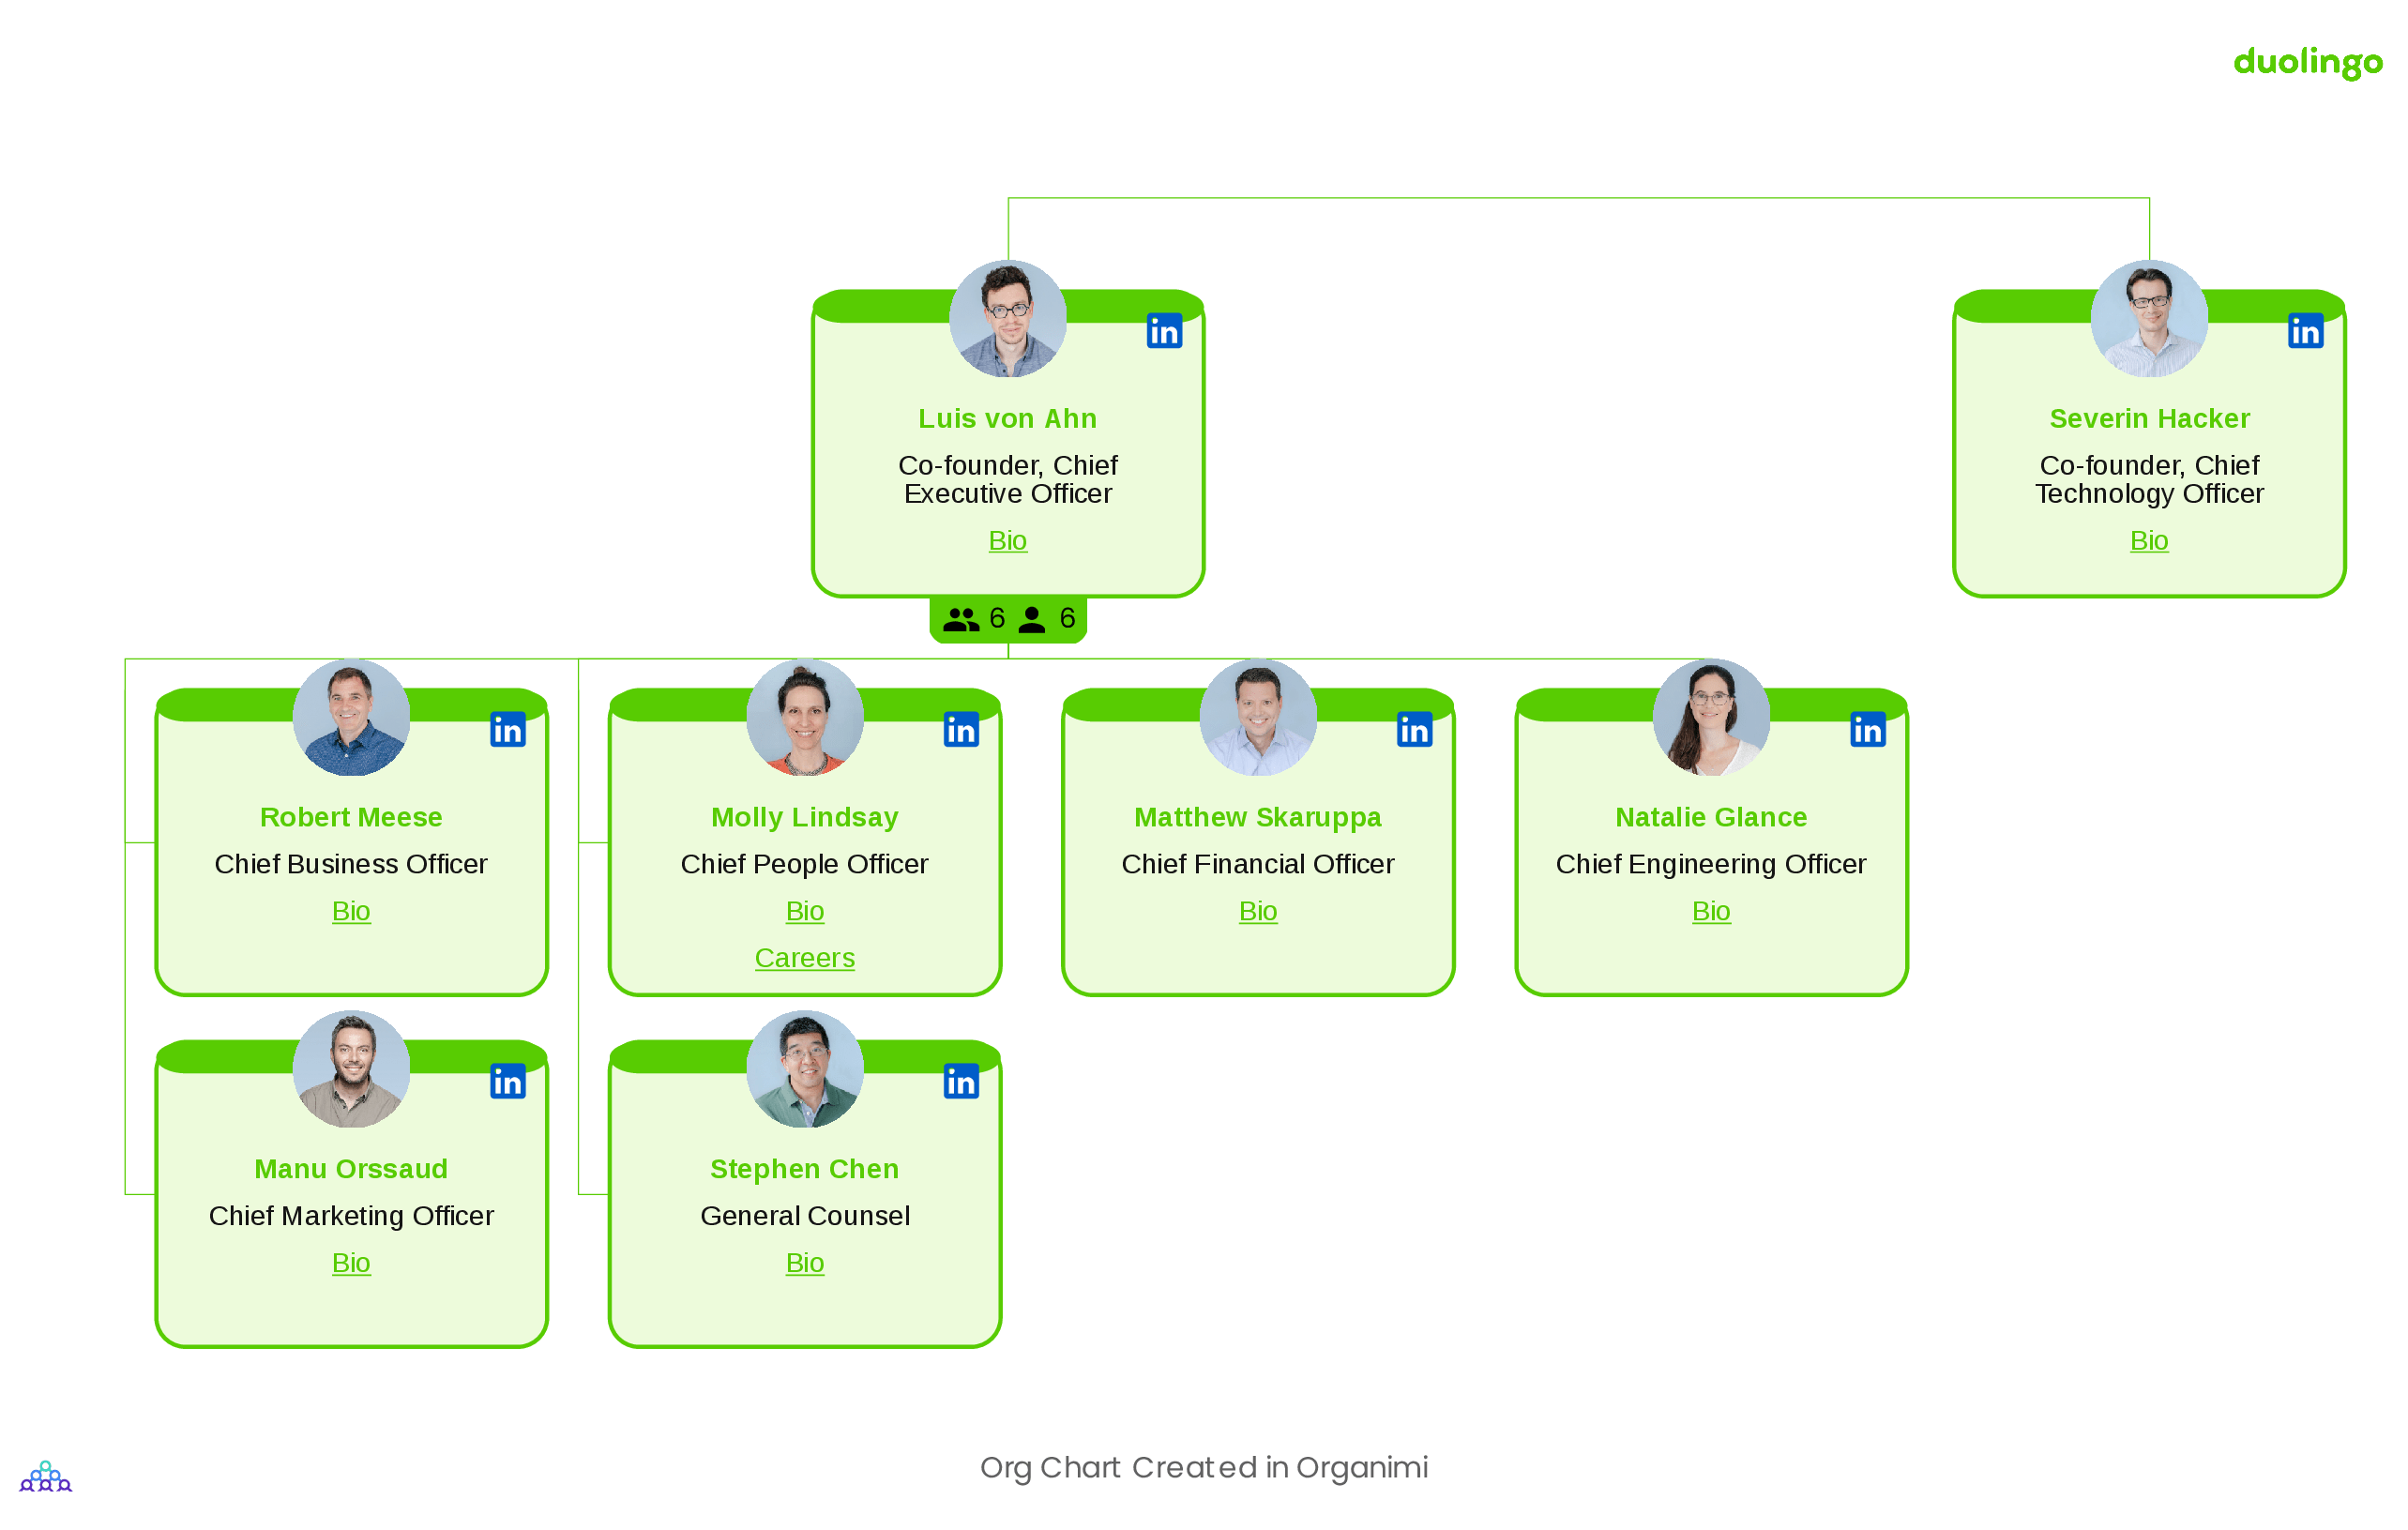 Duolingo's Organizational Structure Chart